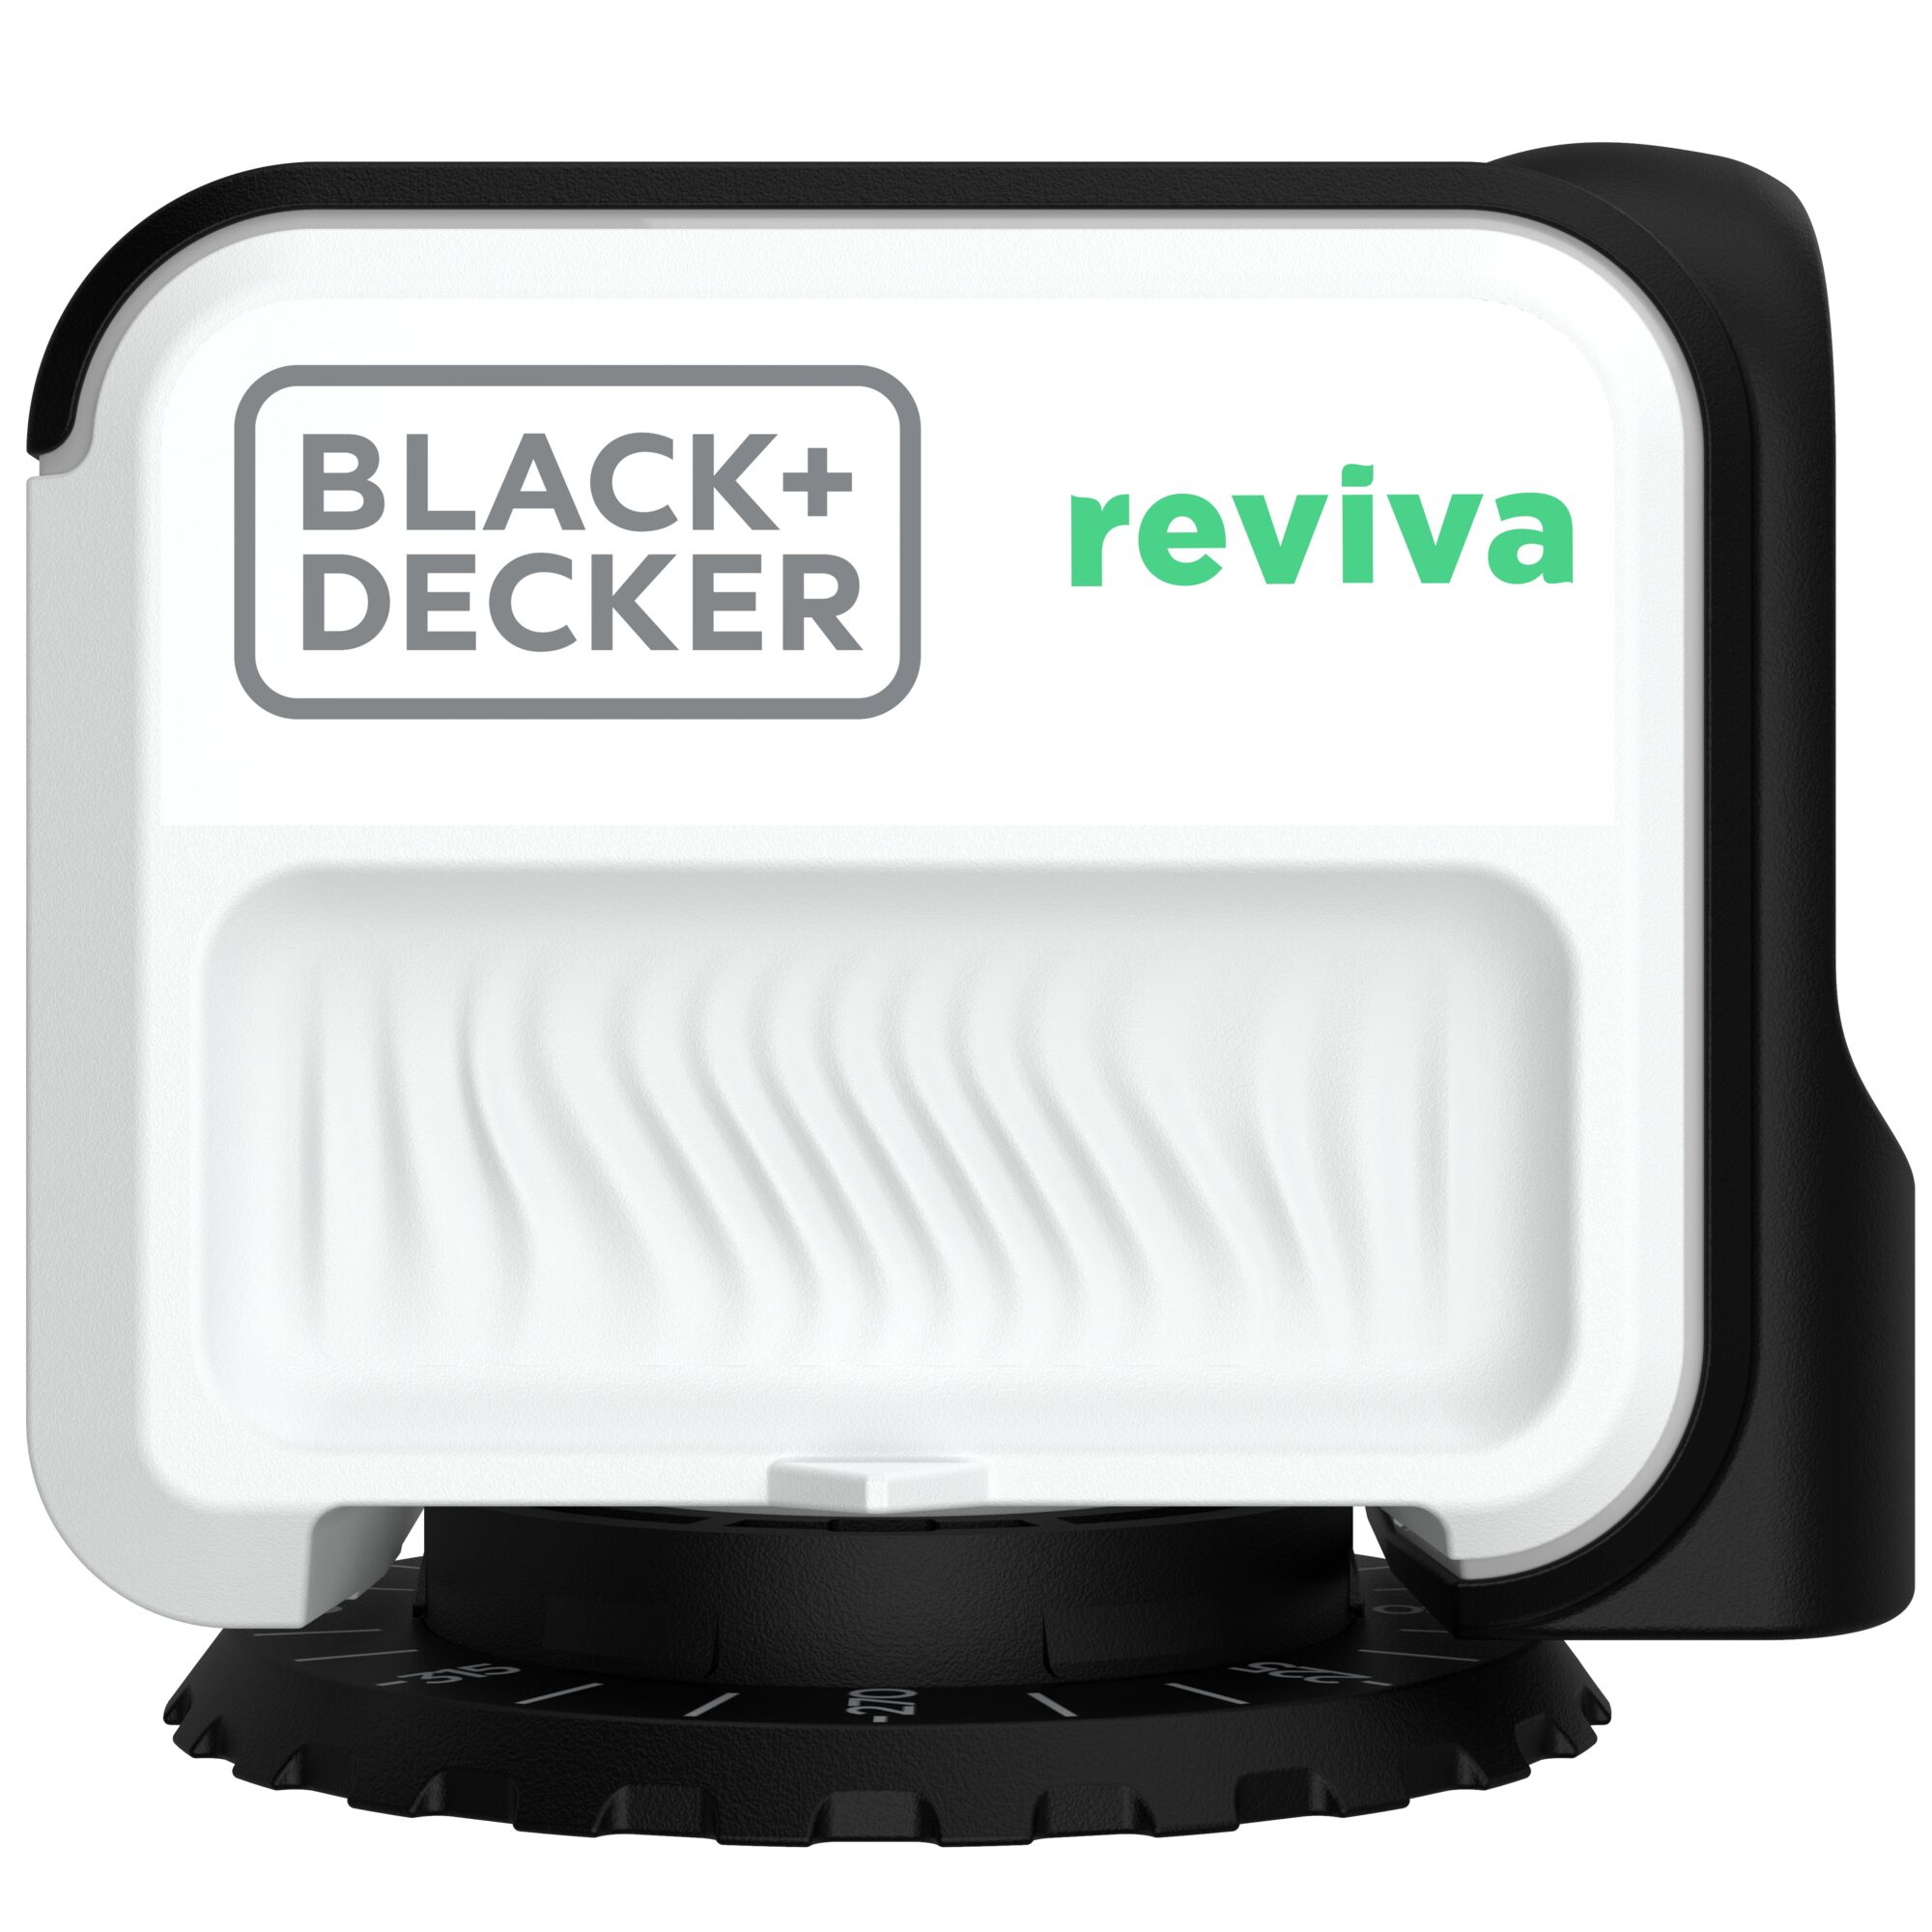 BLACK+DECKER reviva™ Line Laser side front facing right view